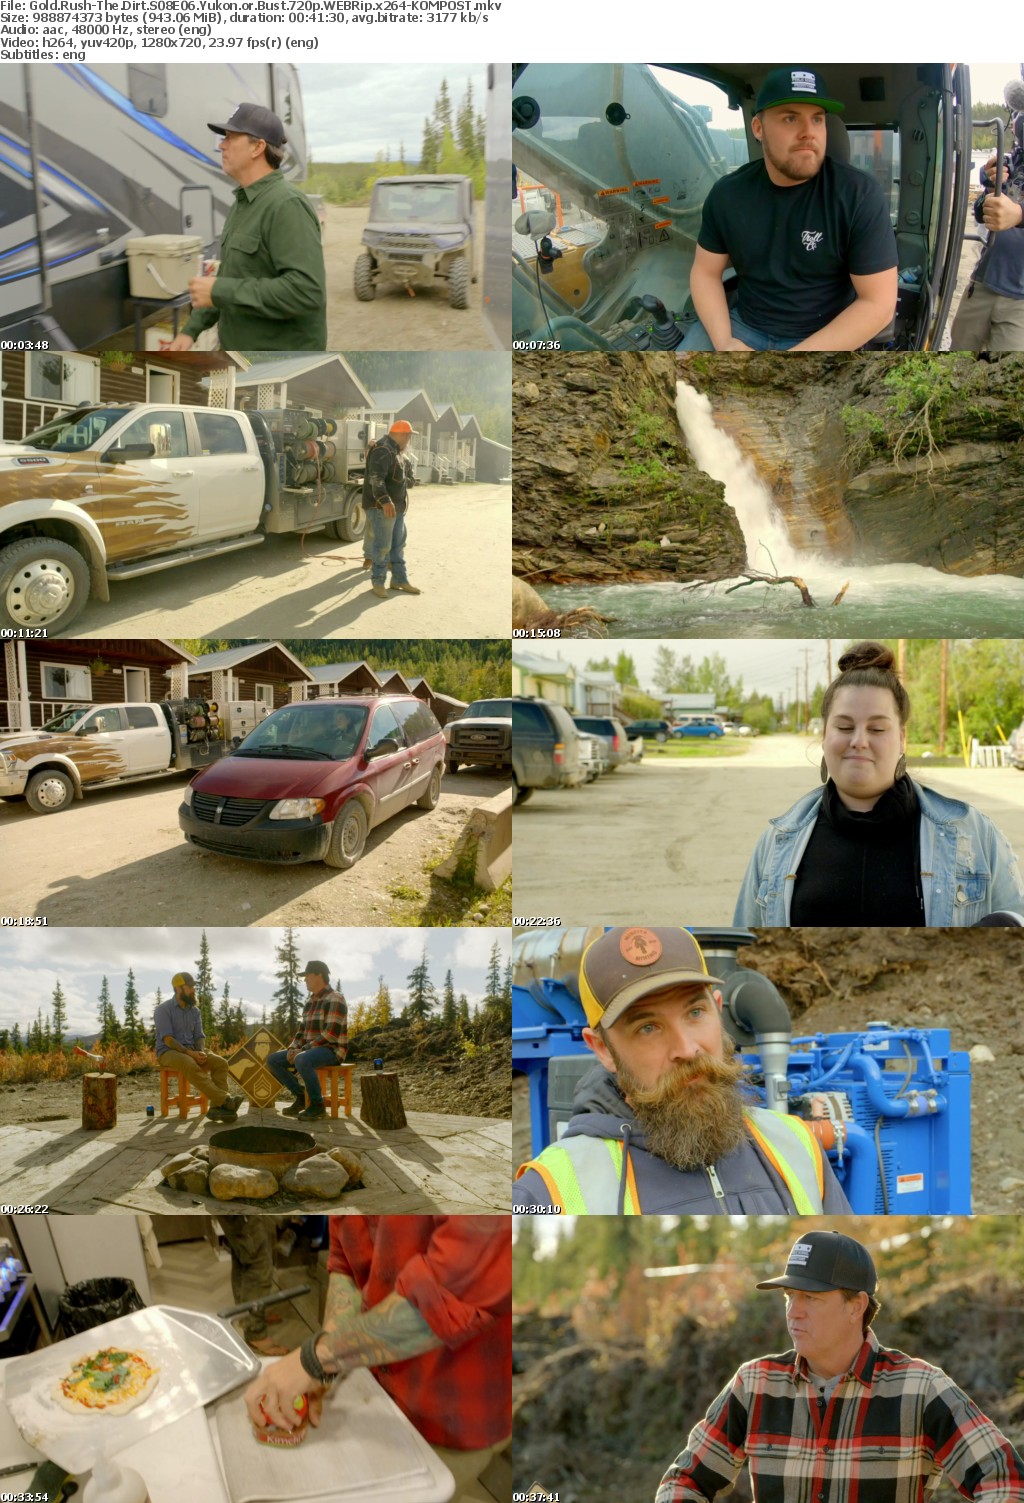 Gold Rush-The Dirt S08E06 Yukon or Bust 720p WEBRip x264-KOMPOST